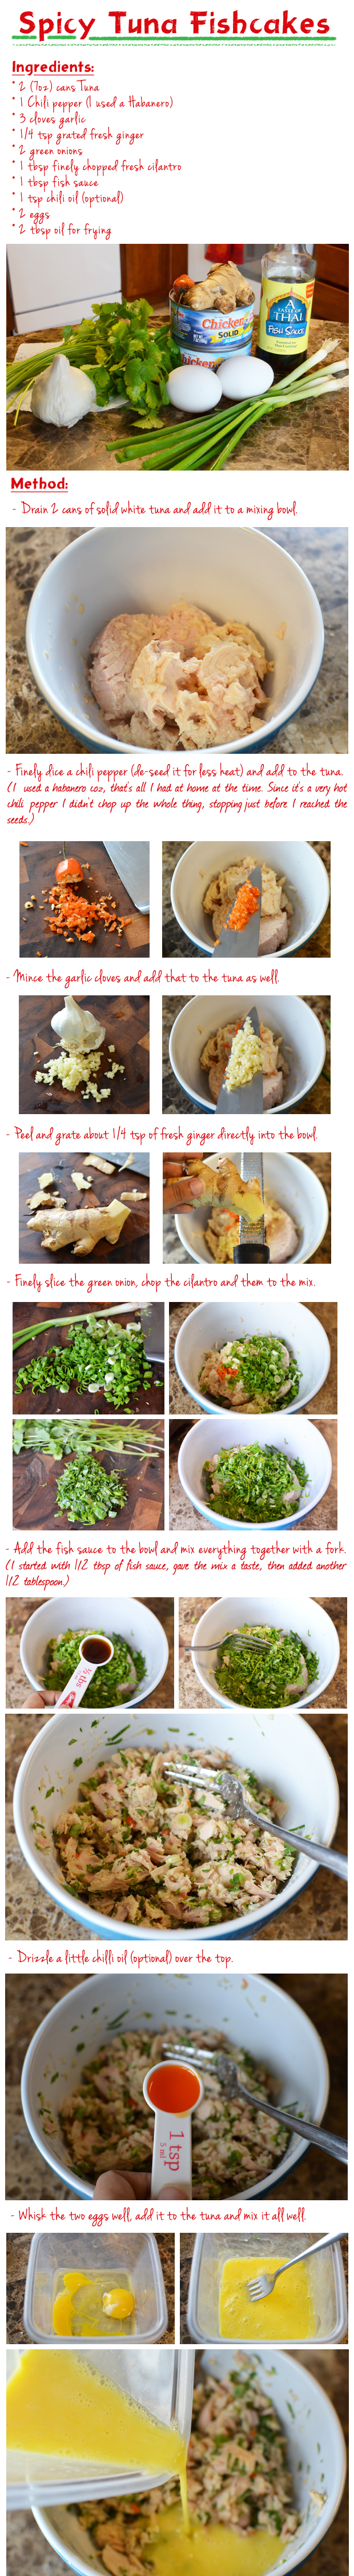 Spicy Tuna Fishcakes Recipe Part-1